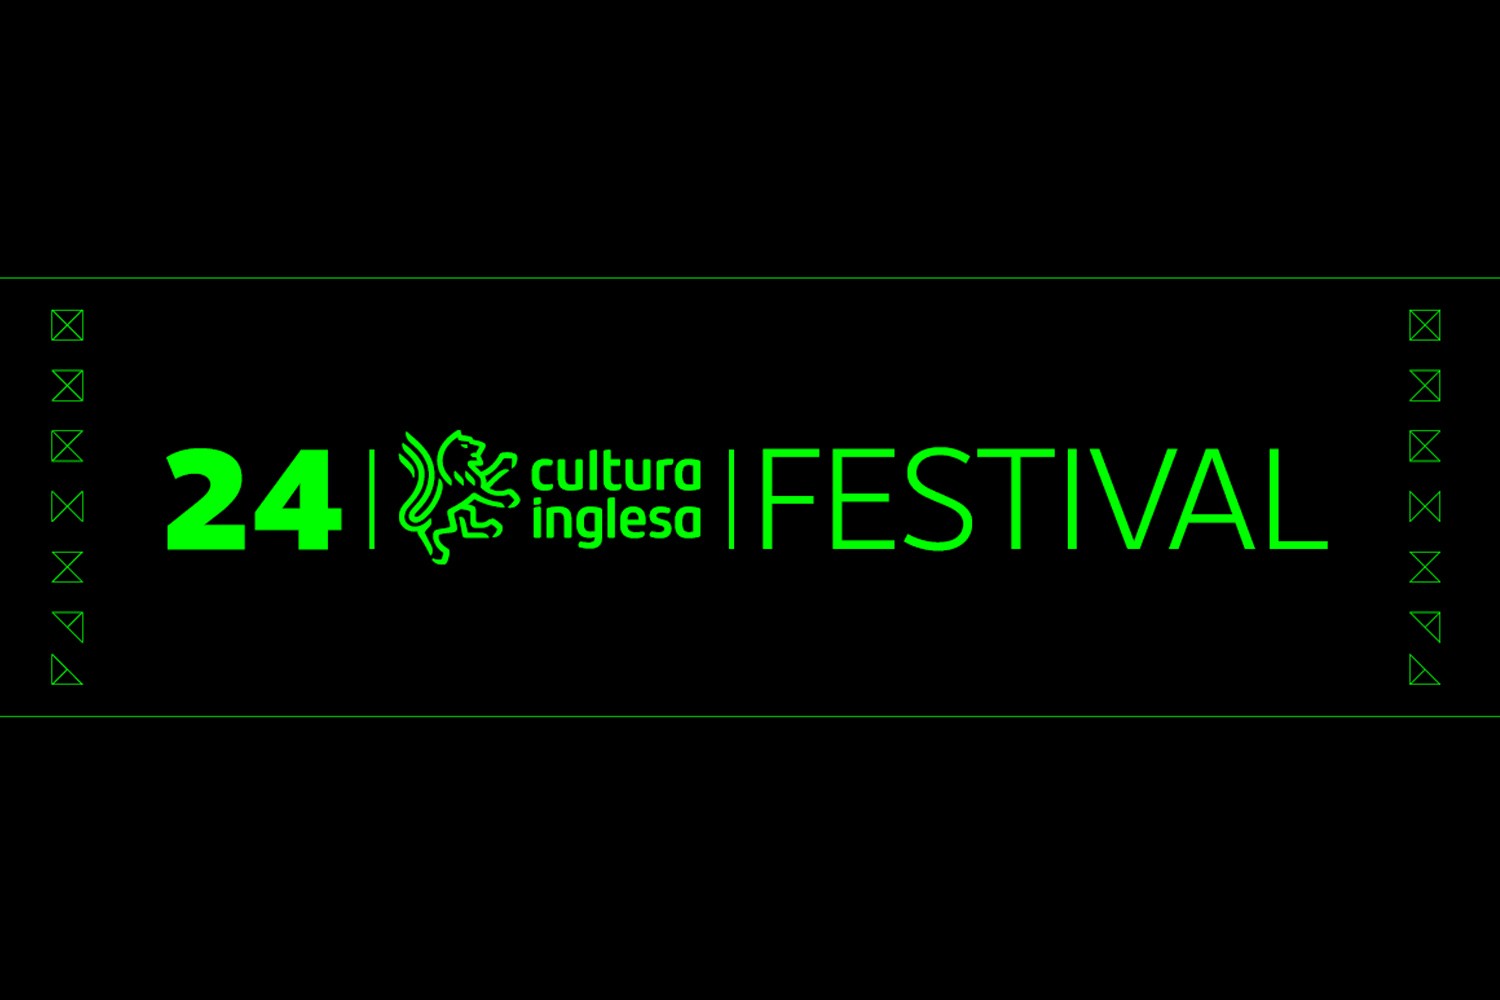 24º Cultura Inglesa Festival